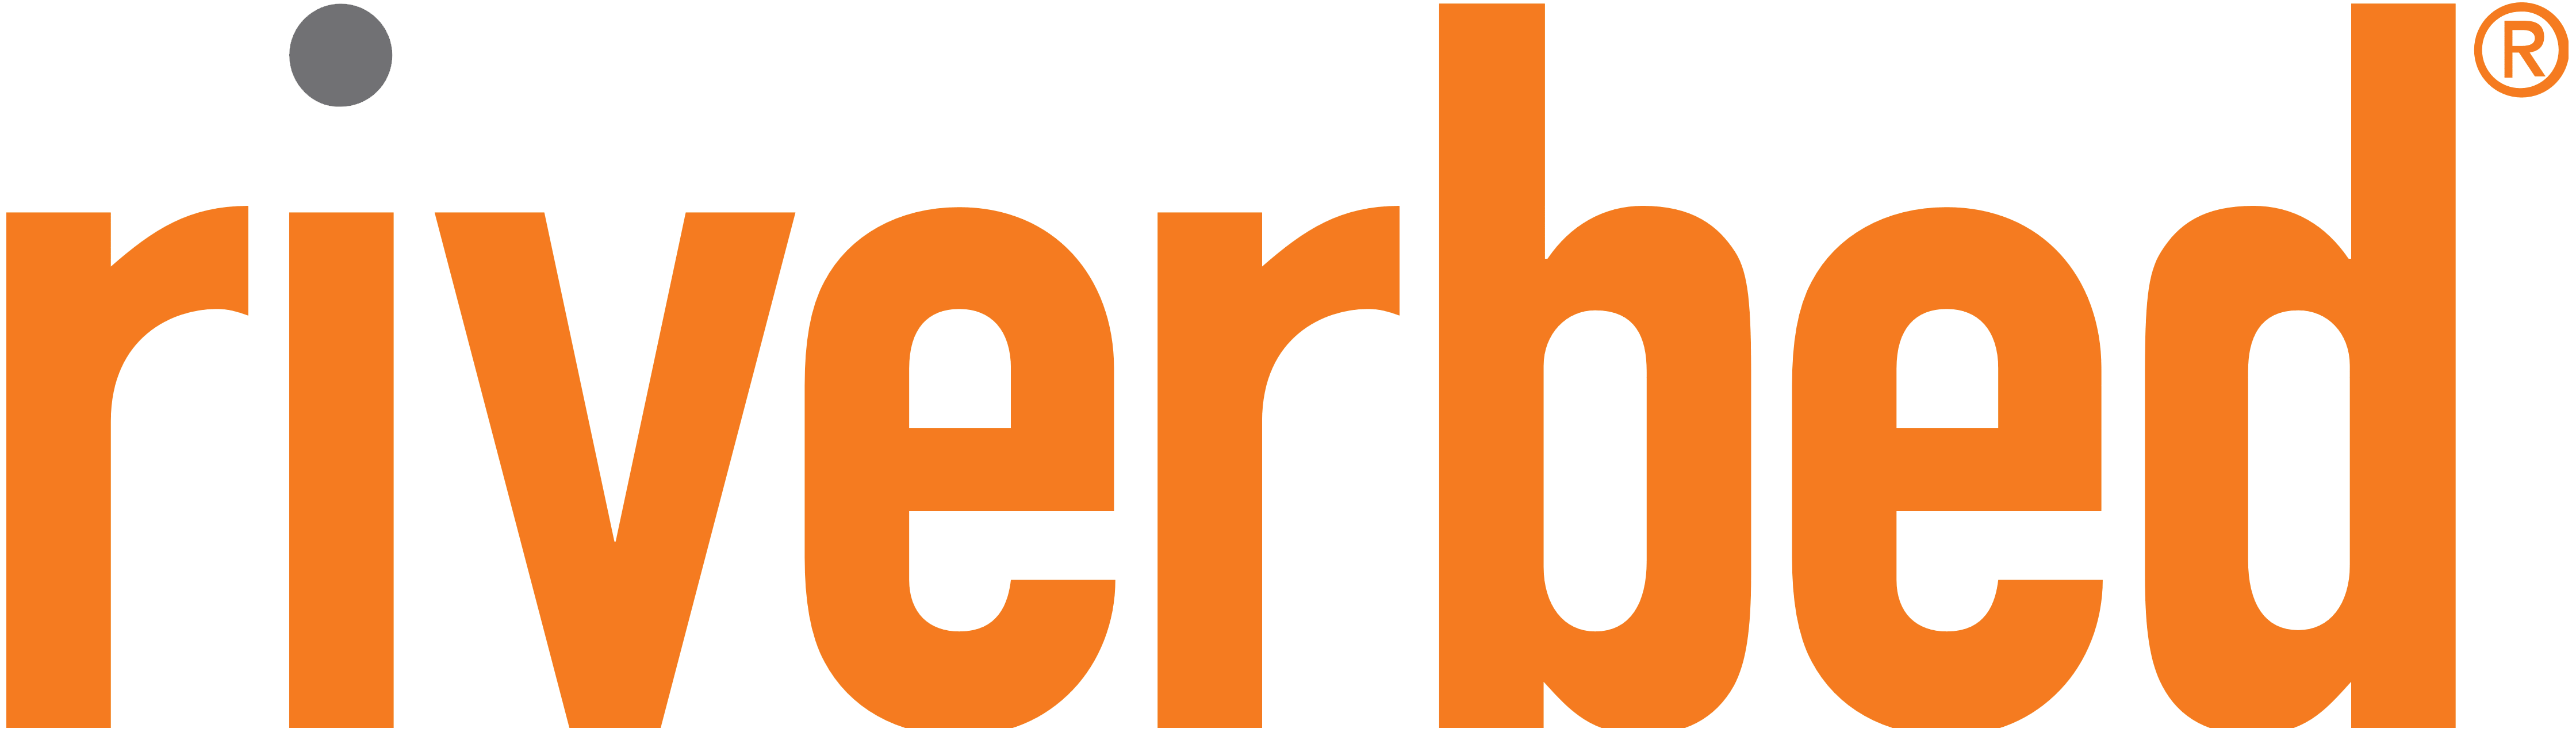 Riverbed Logo - Riverbed – Logos Download